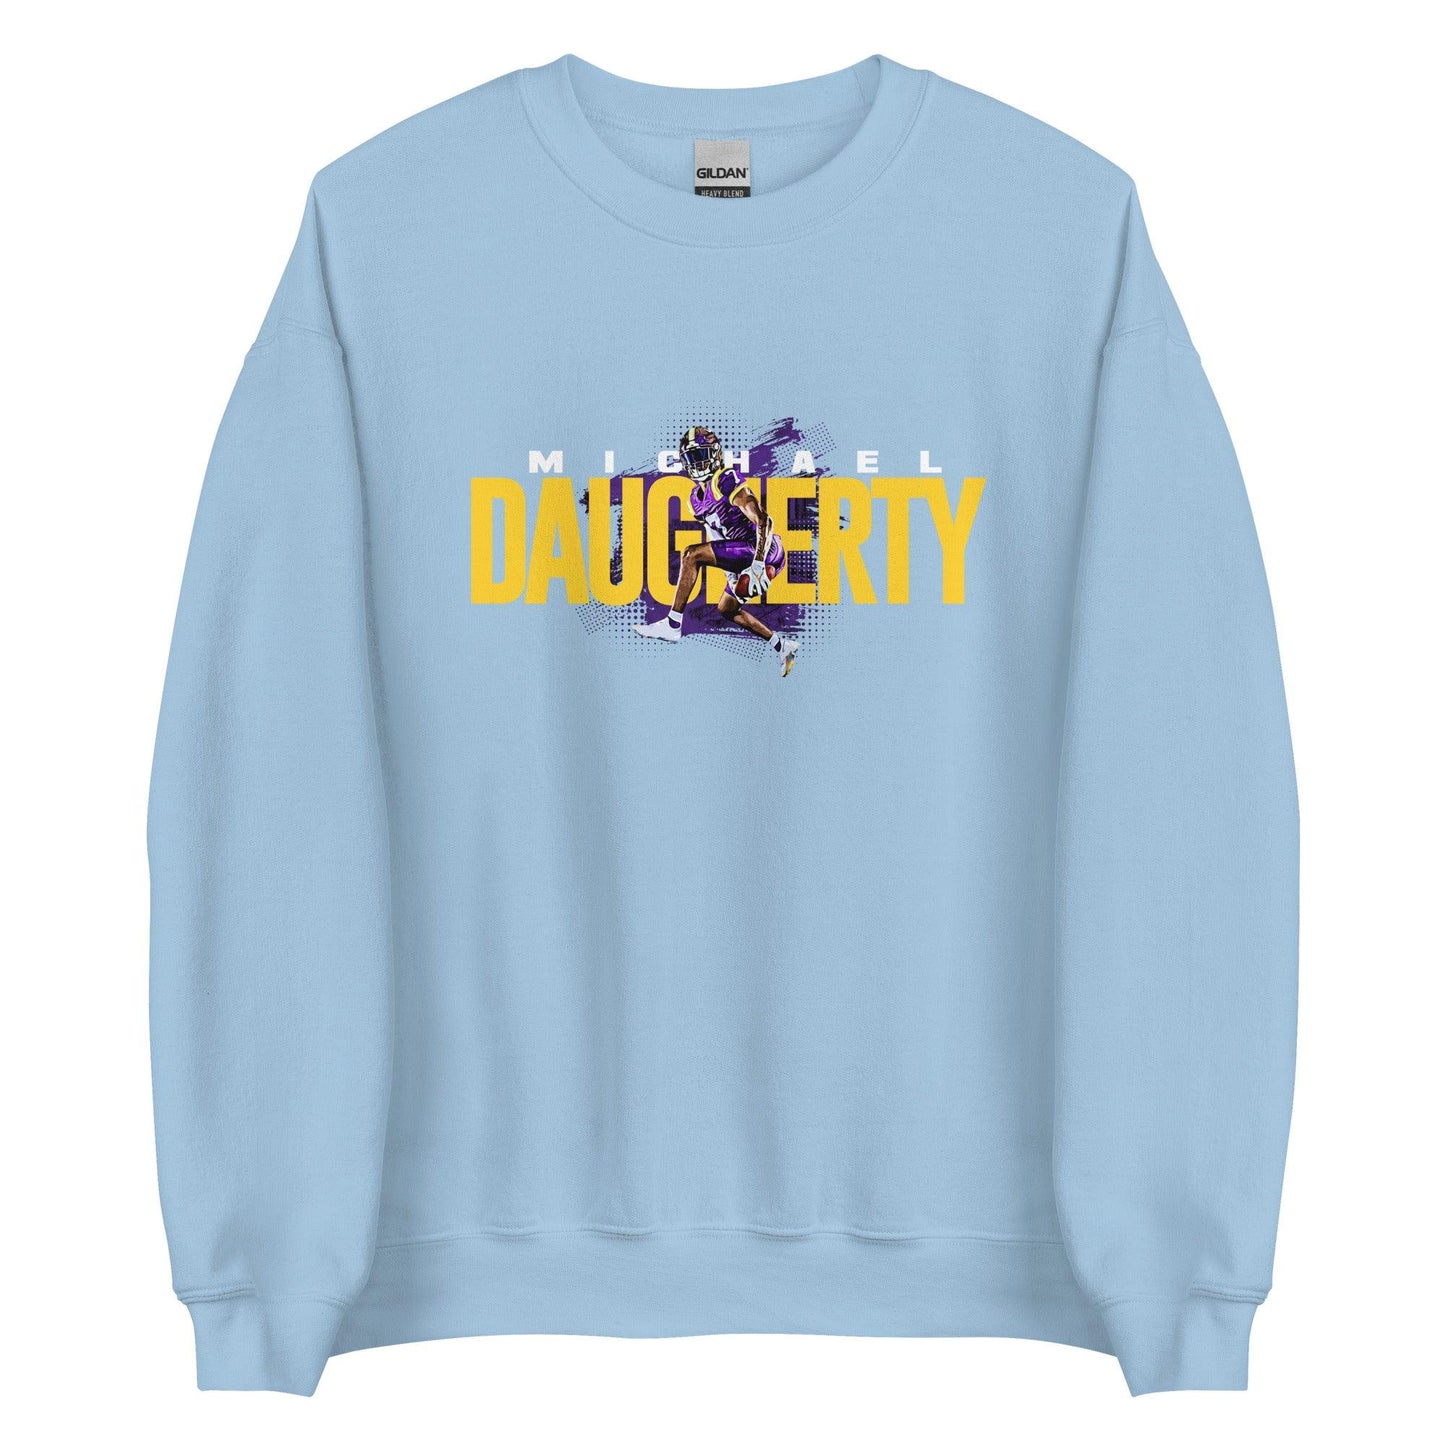 Michael Daugherty "Gameday" Sweatshirt - Fan Arch